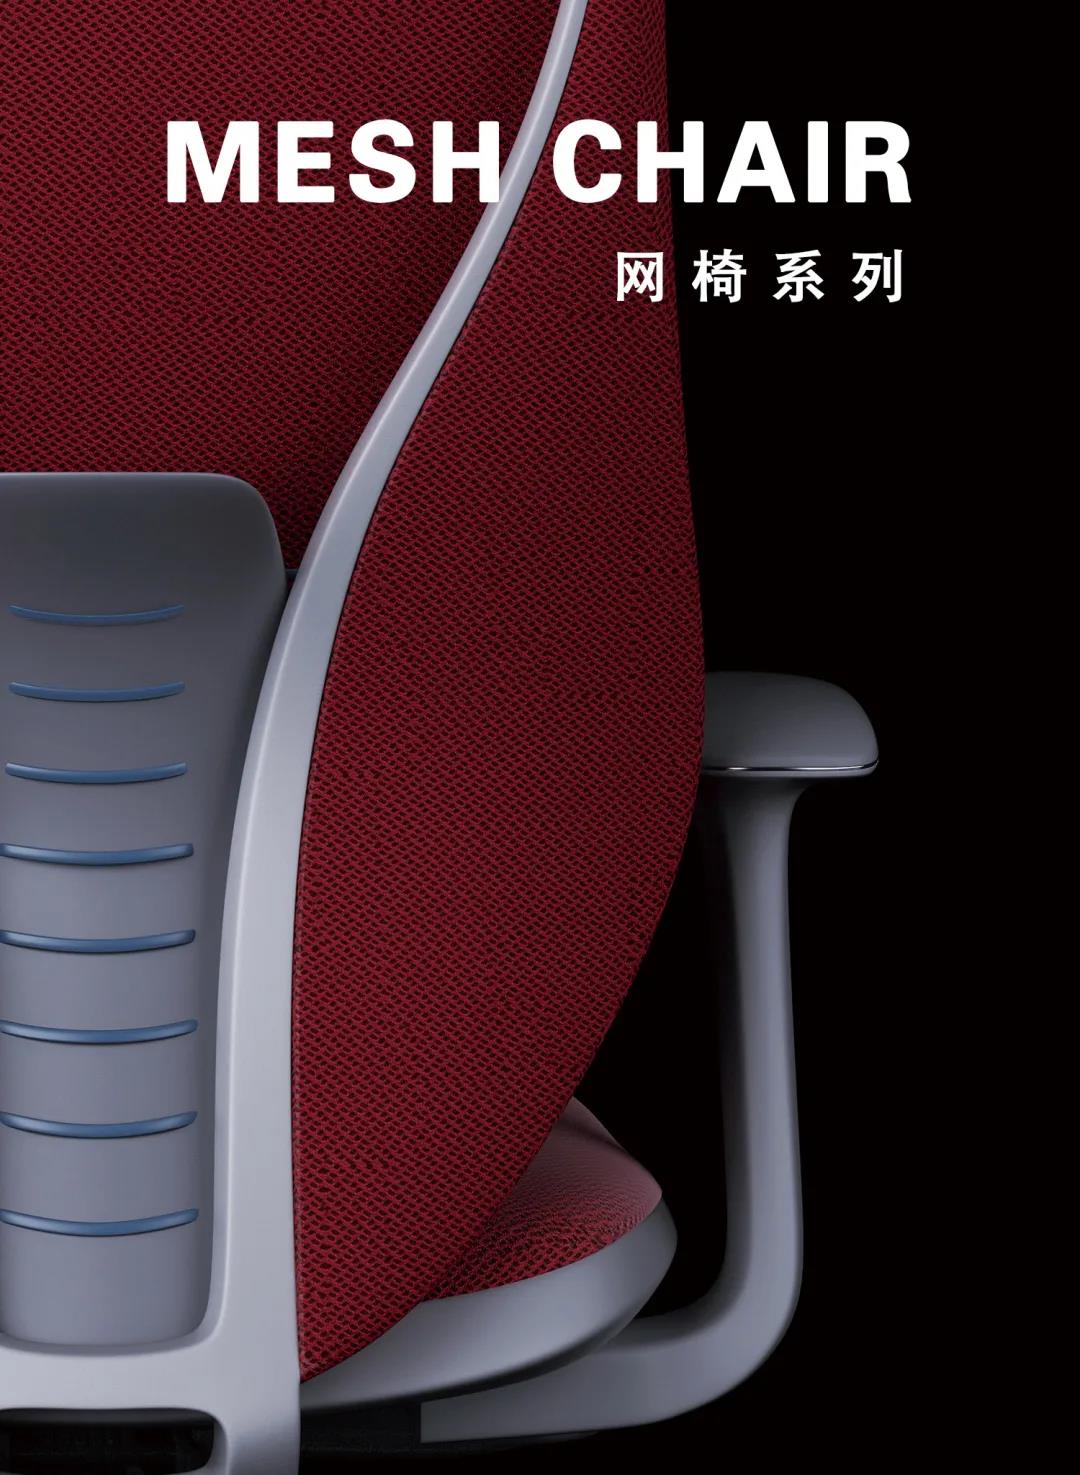 MESH CHAIR 網椅系列 丨突破常規設計，探索未來辦公(圖2)